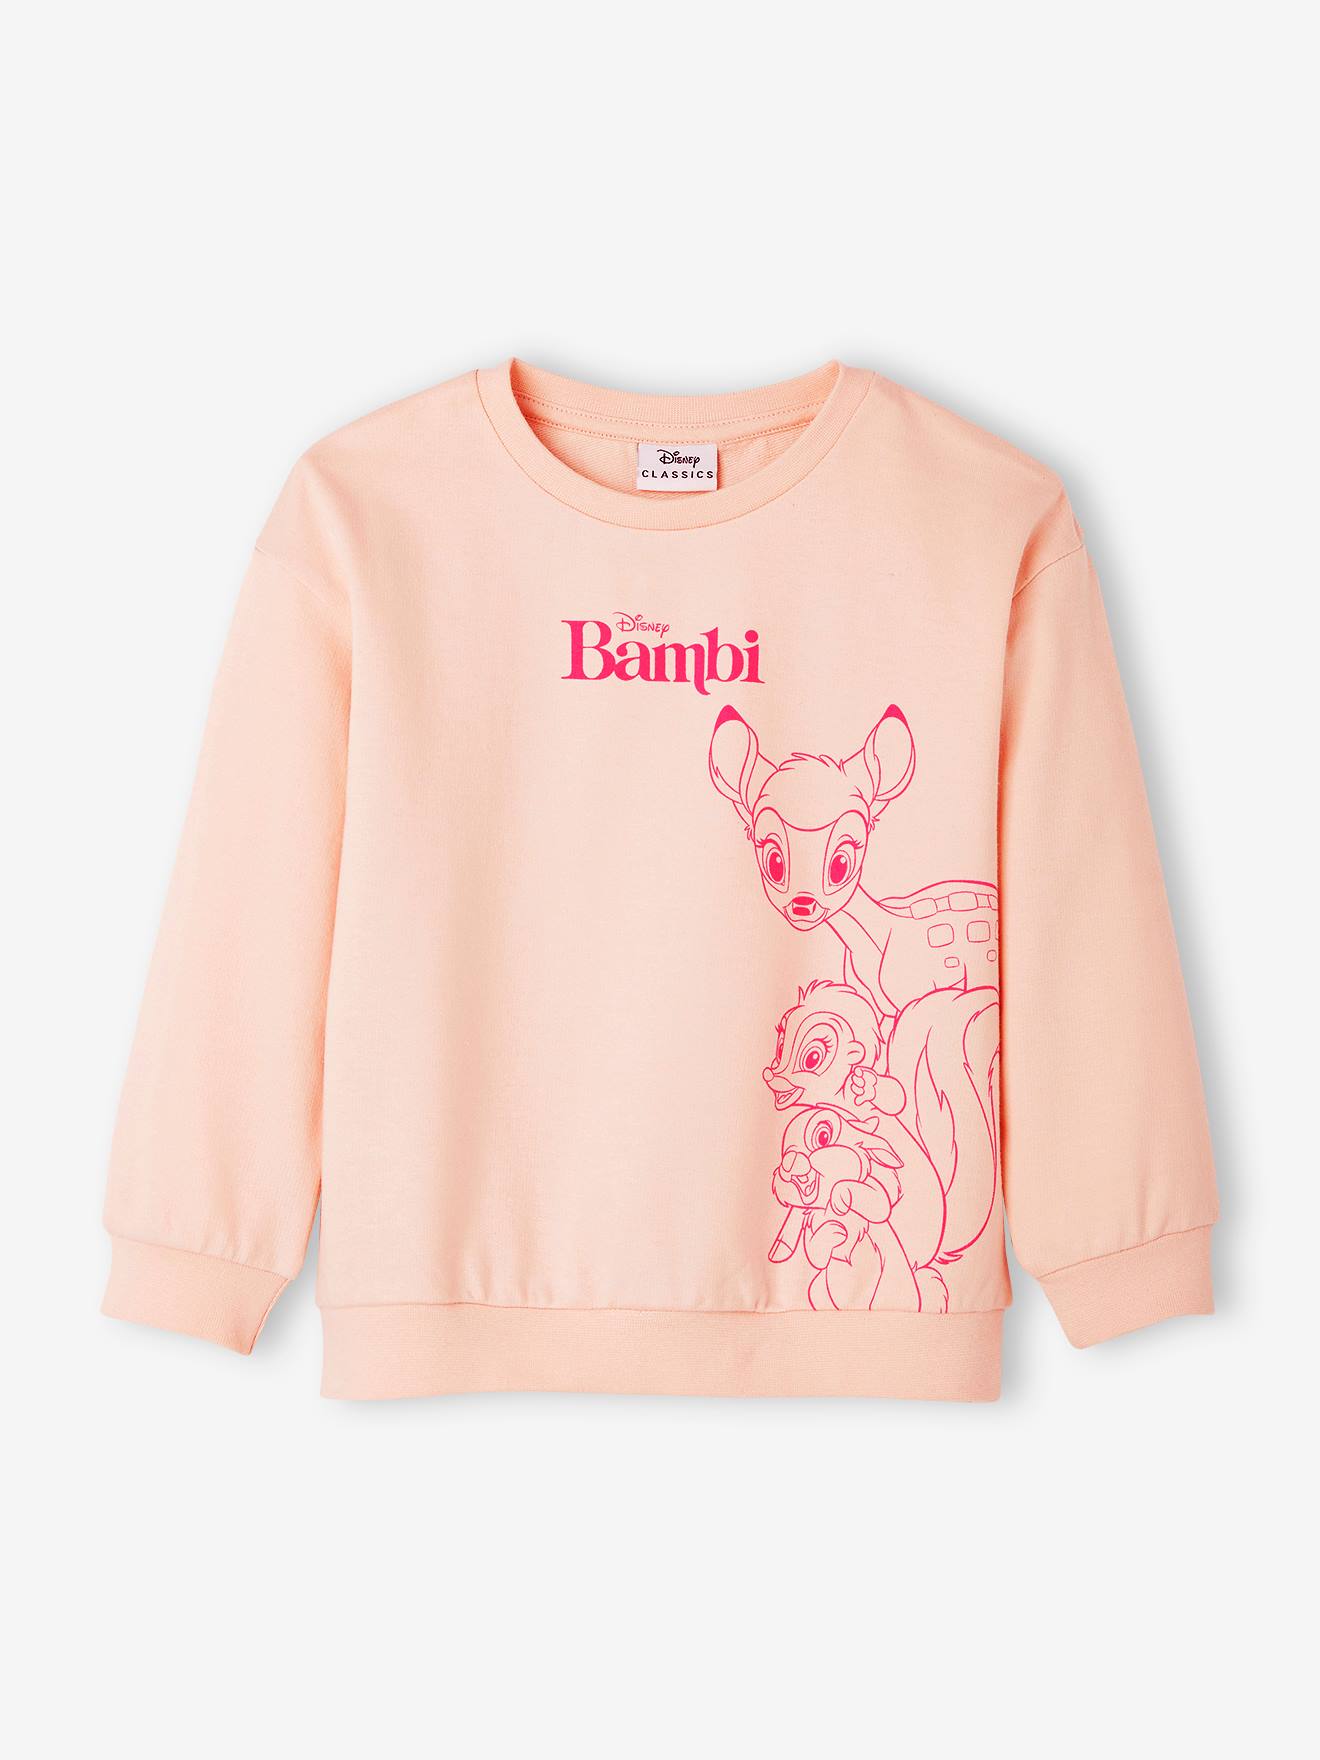 Bambi Sweatshirt for Girls, by Disney(r) old rose